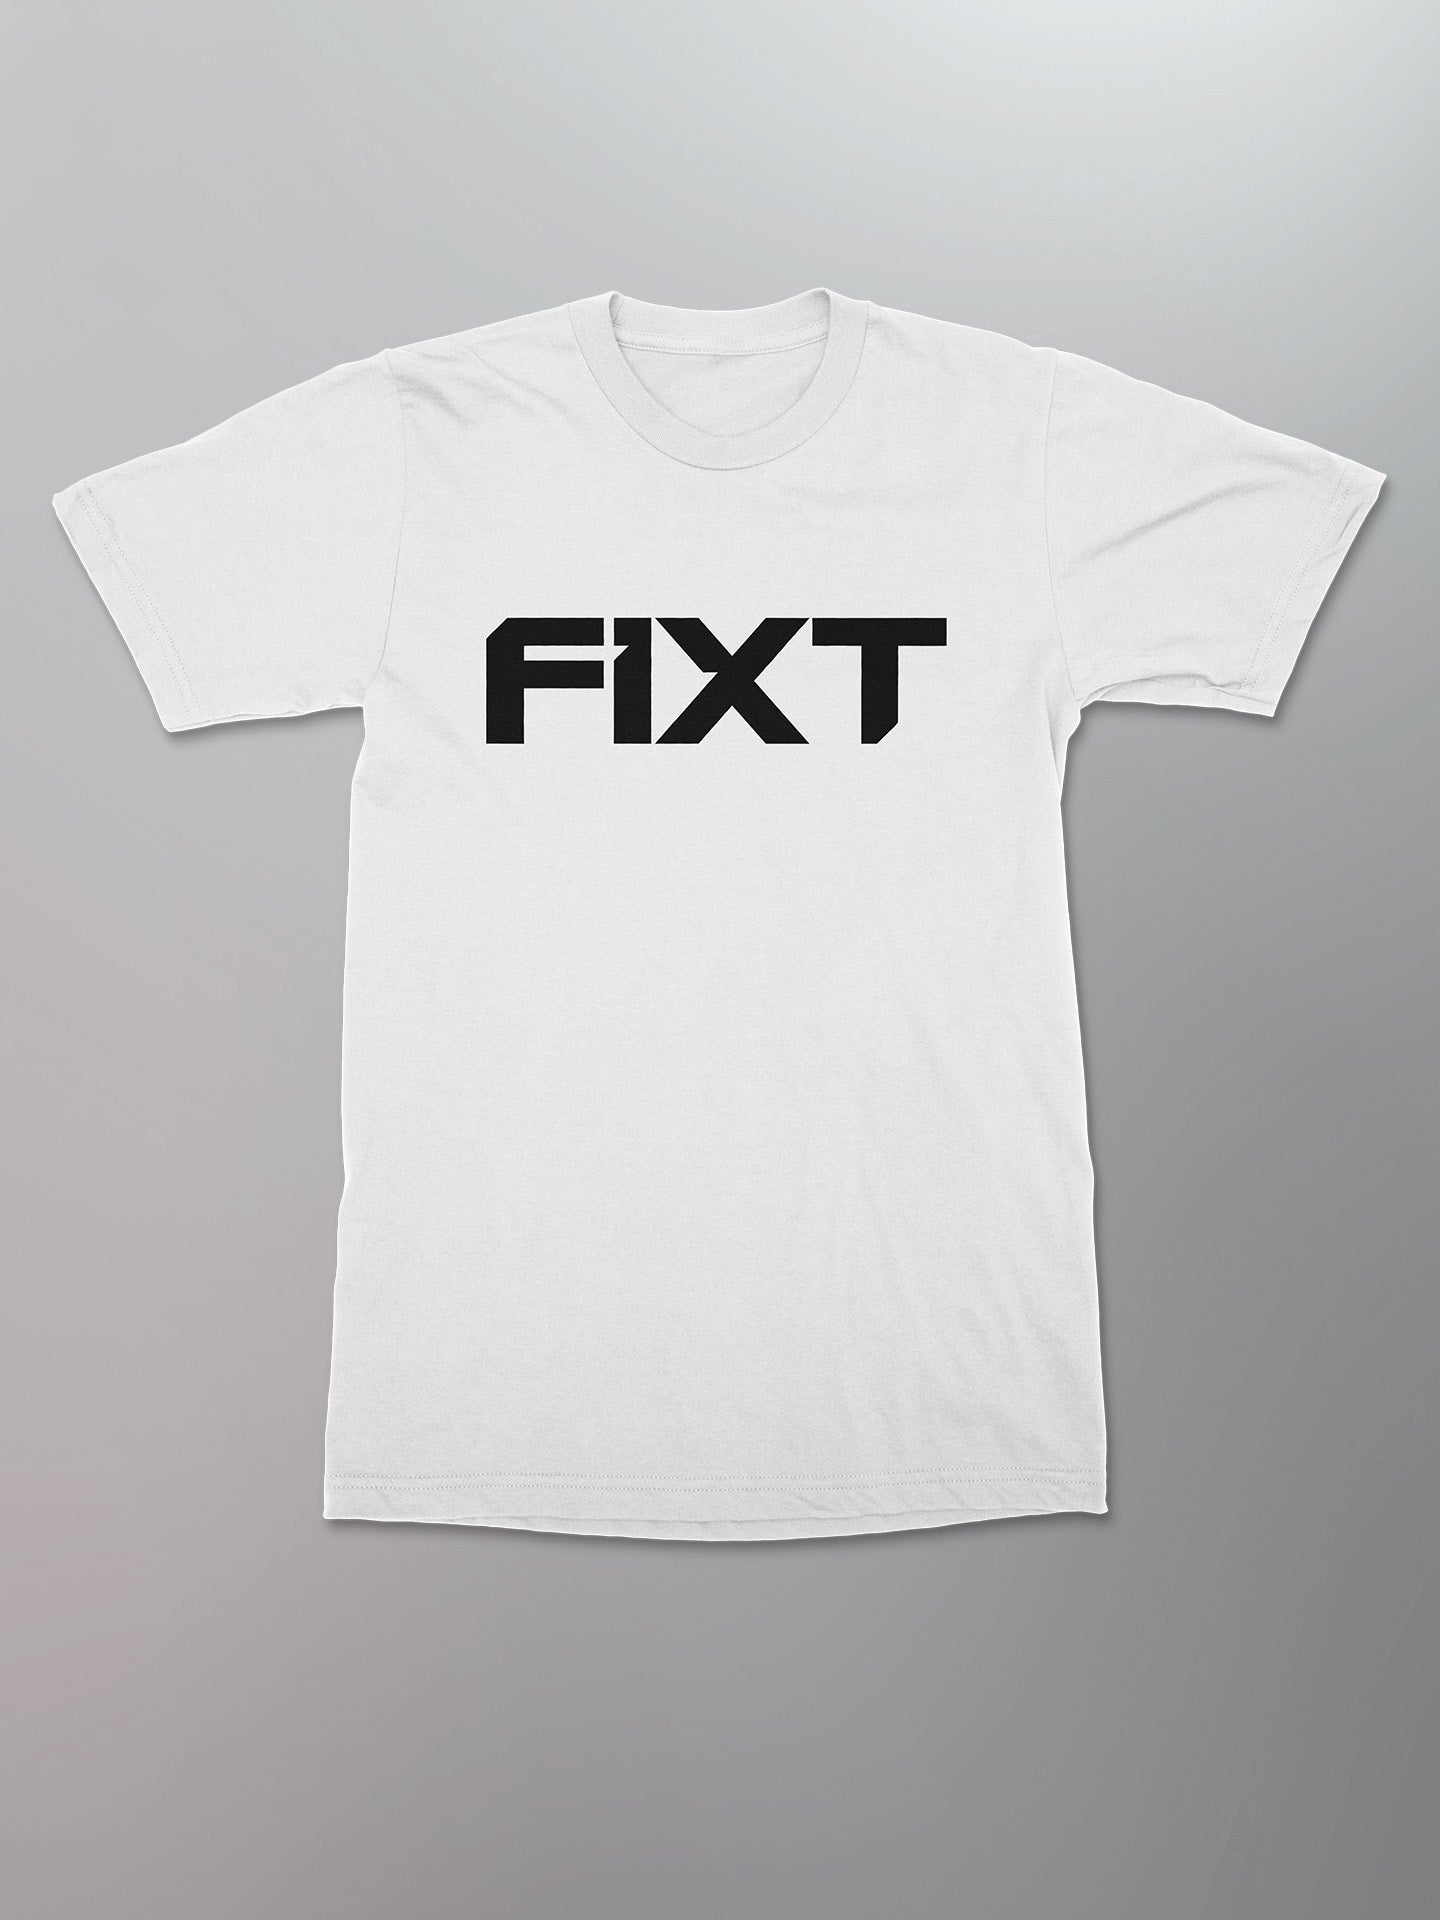 FiXT - Logo Shirt [White]